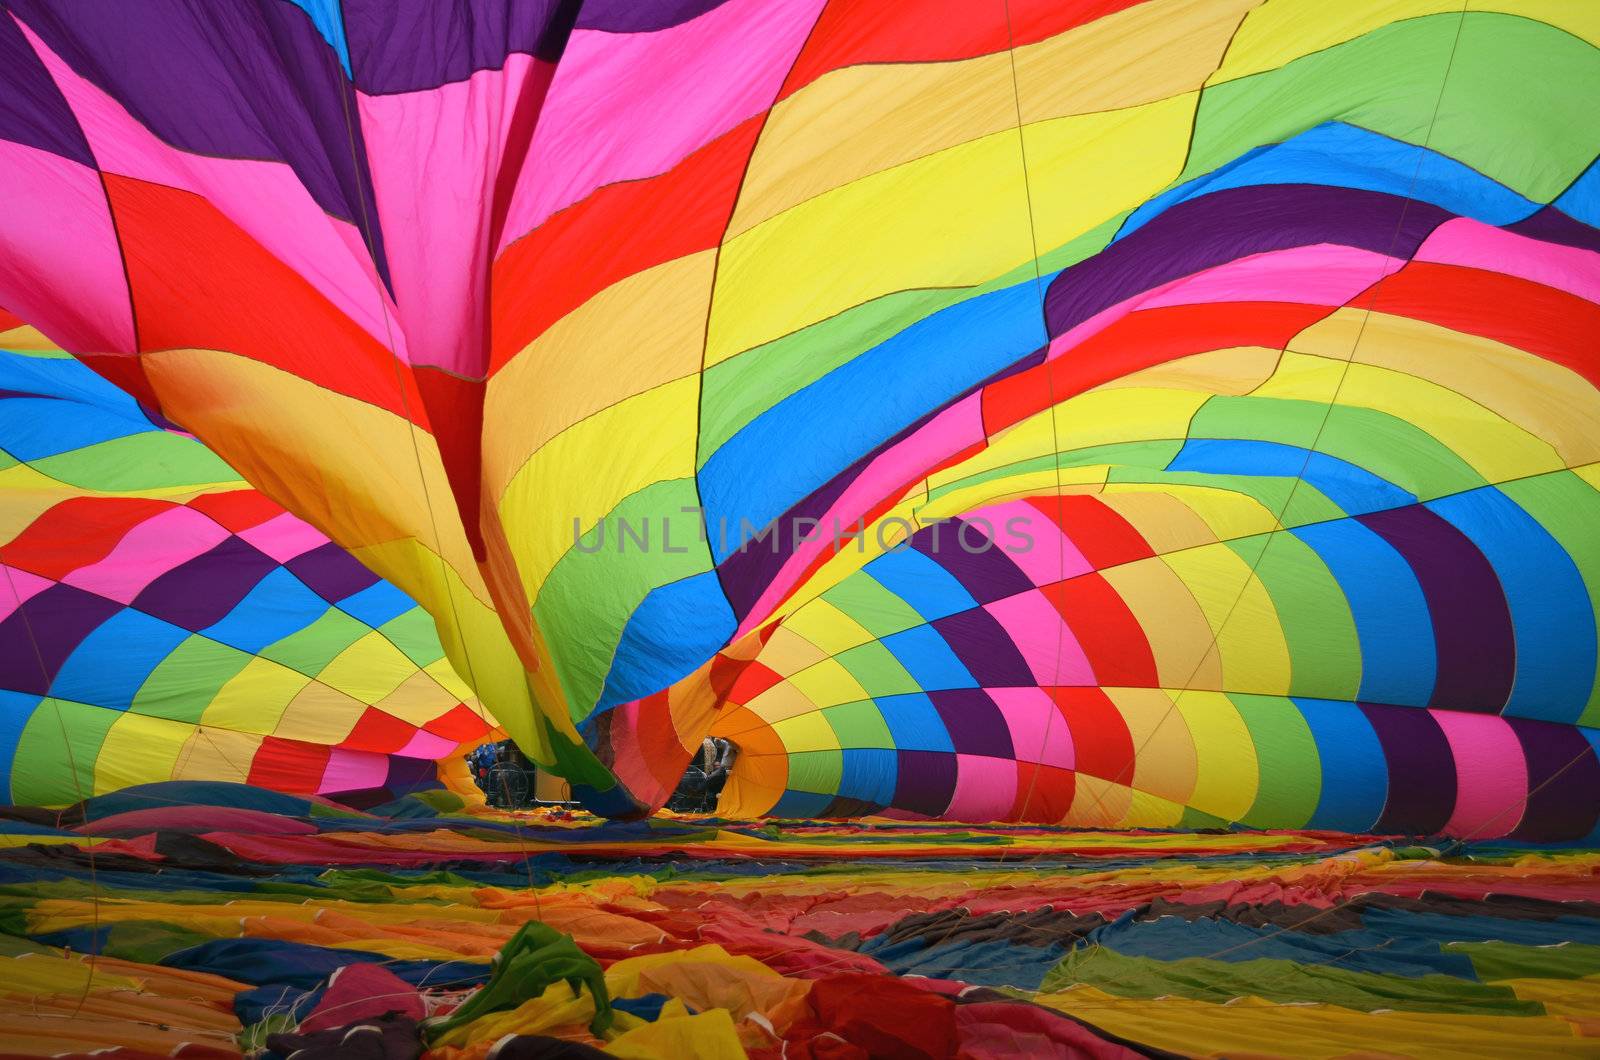 Inside a hot air balloon by artofphoto